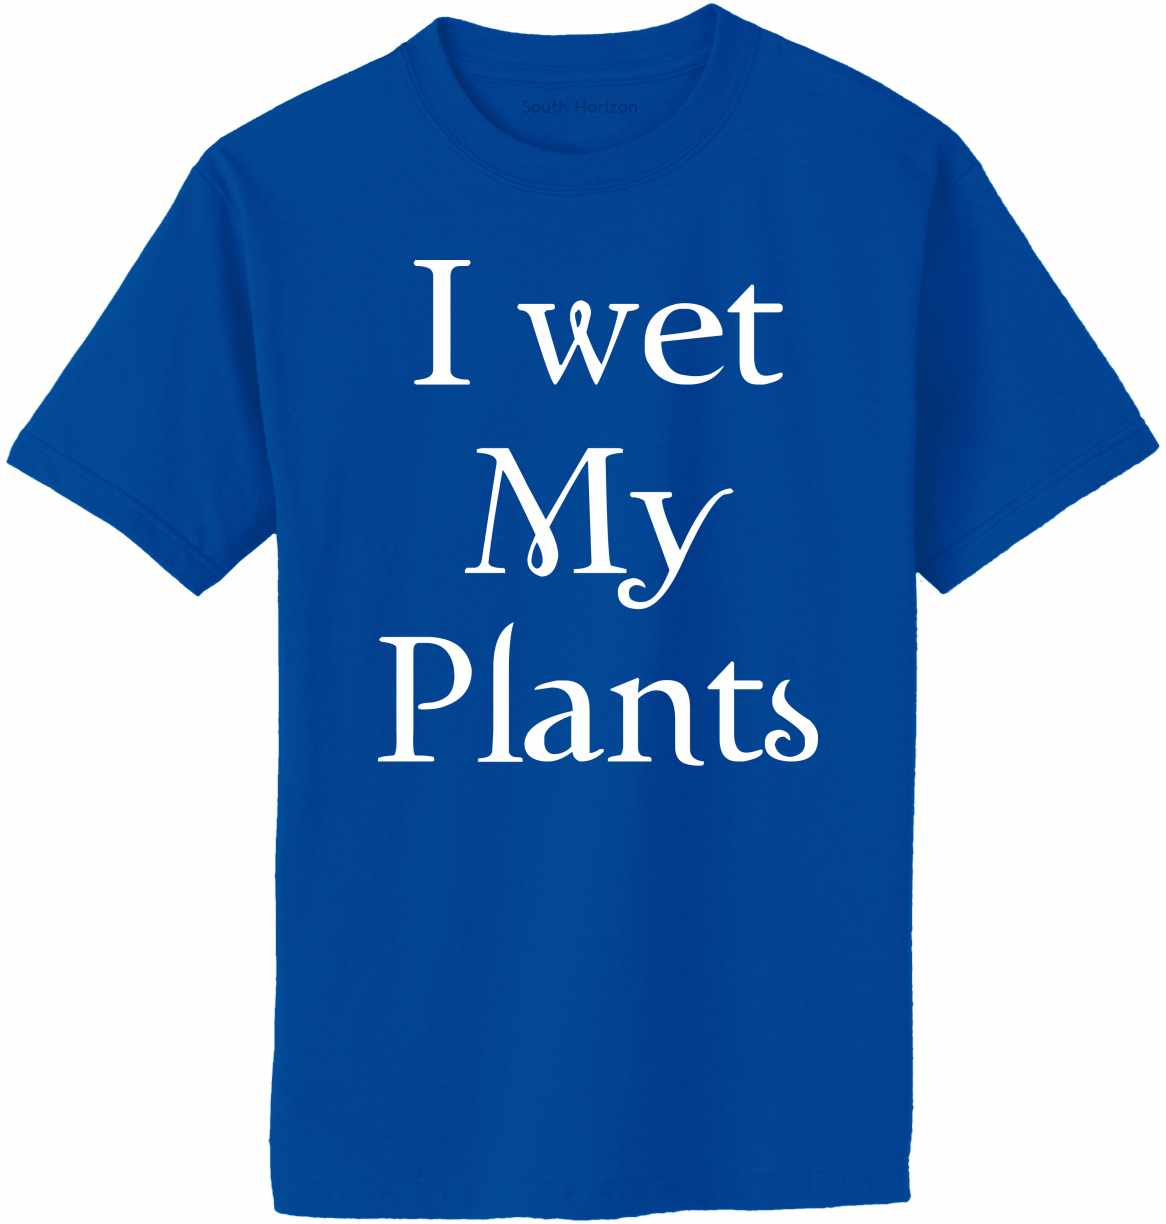 I Wet My Plants Adult T-Shirt (#1108-1)